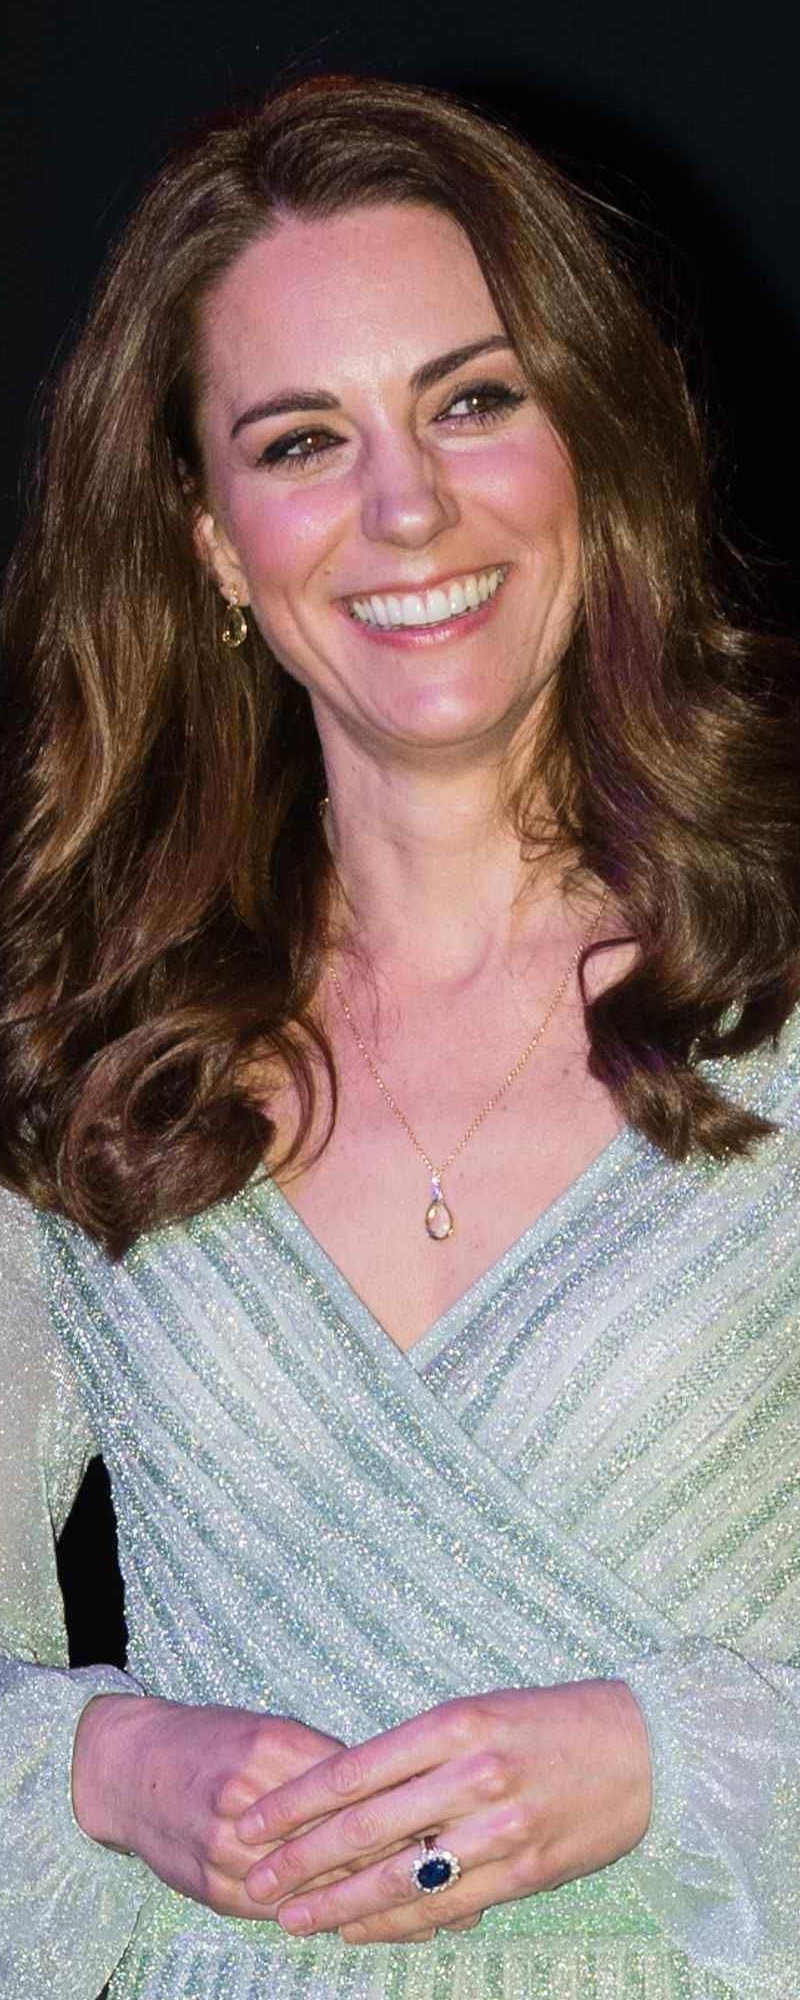 Kiki McDonough Candy Mini Green Amethyst and Diamond Pendant Necklace as seen on Kate Middleton, The Duchess of Cambridge.